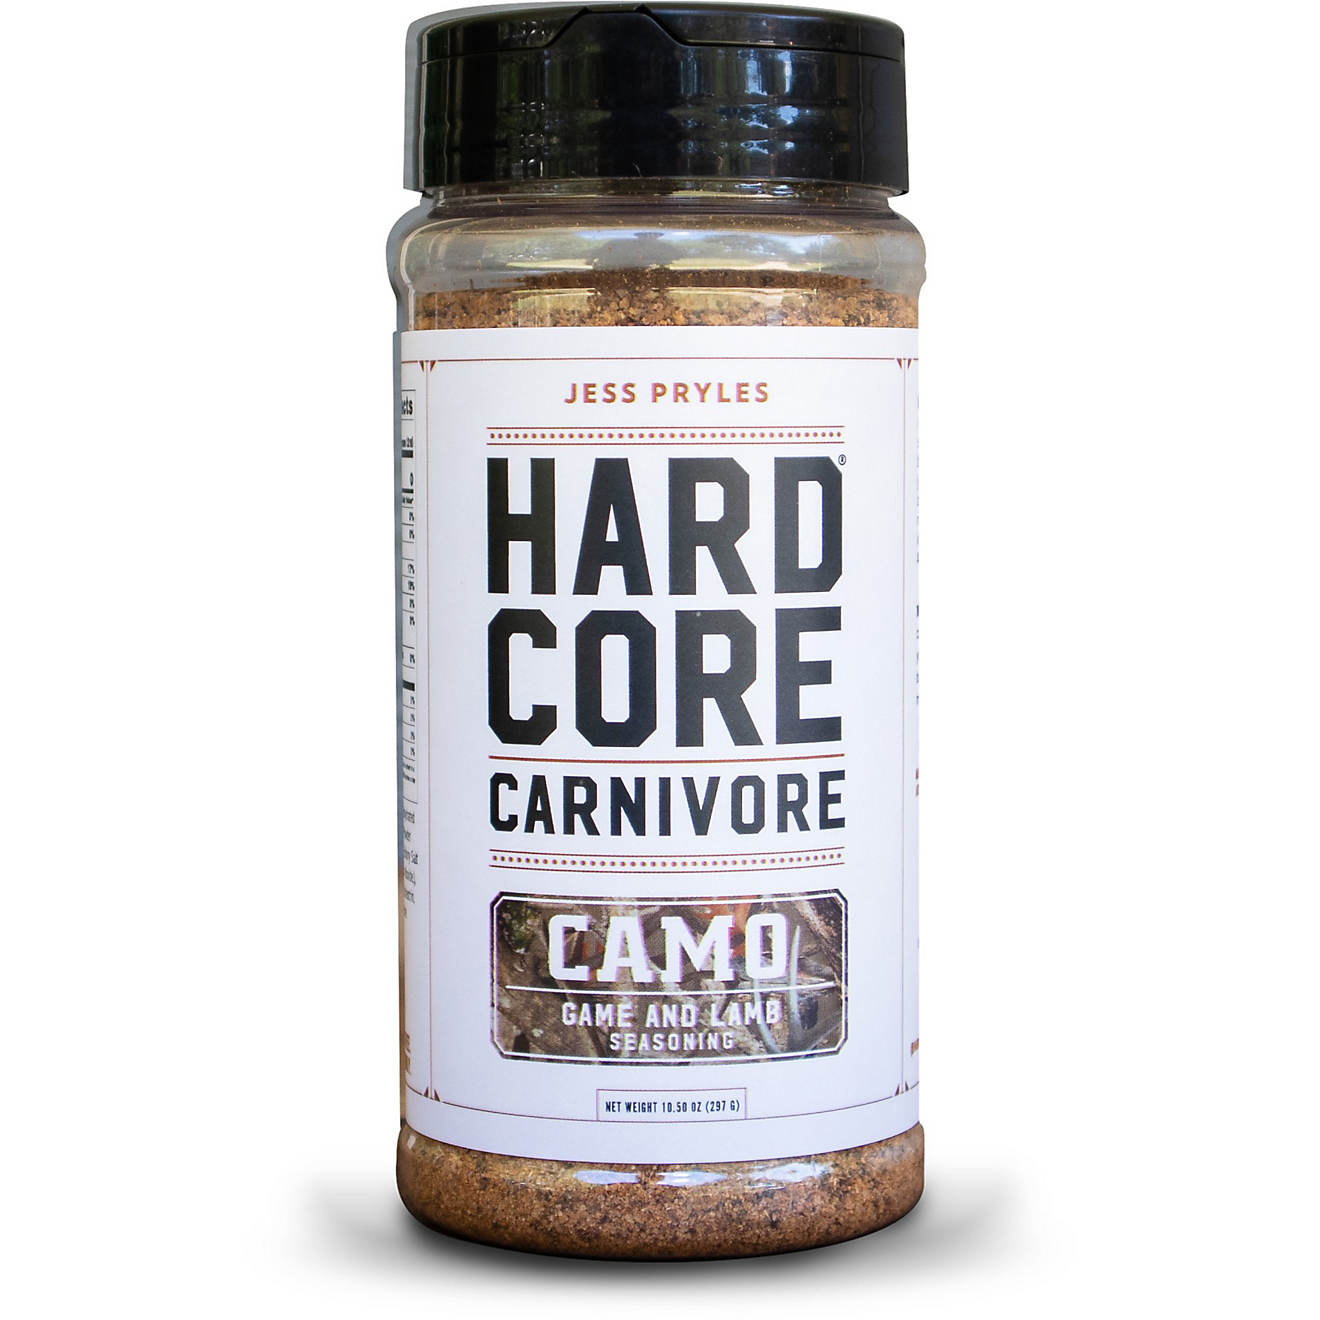 Hardcore Carnivore 10.5 oz Camo Game and Lamb Seasoning                                                                          - view number 1